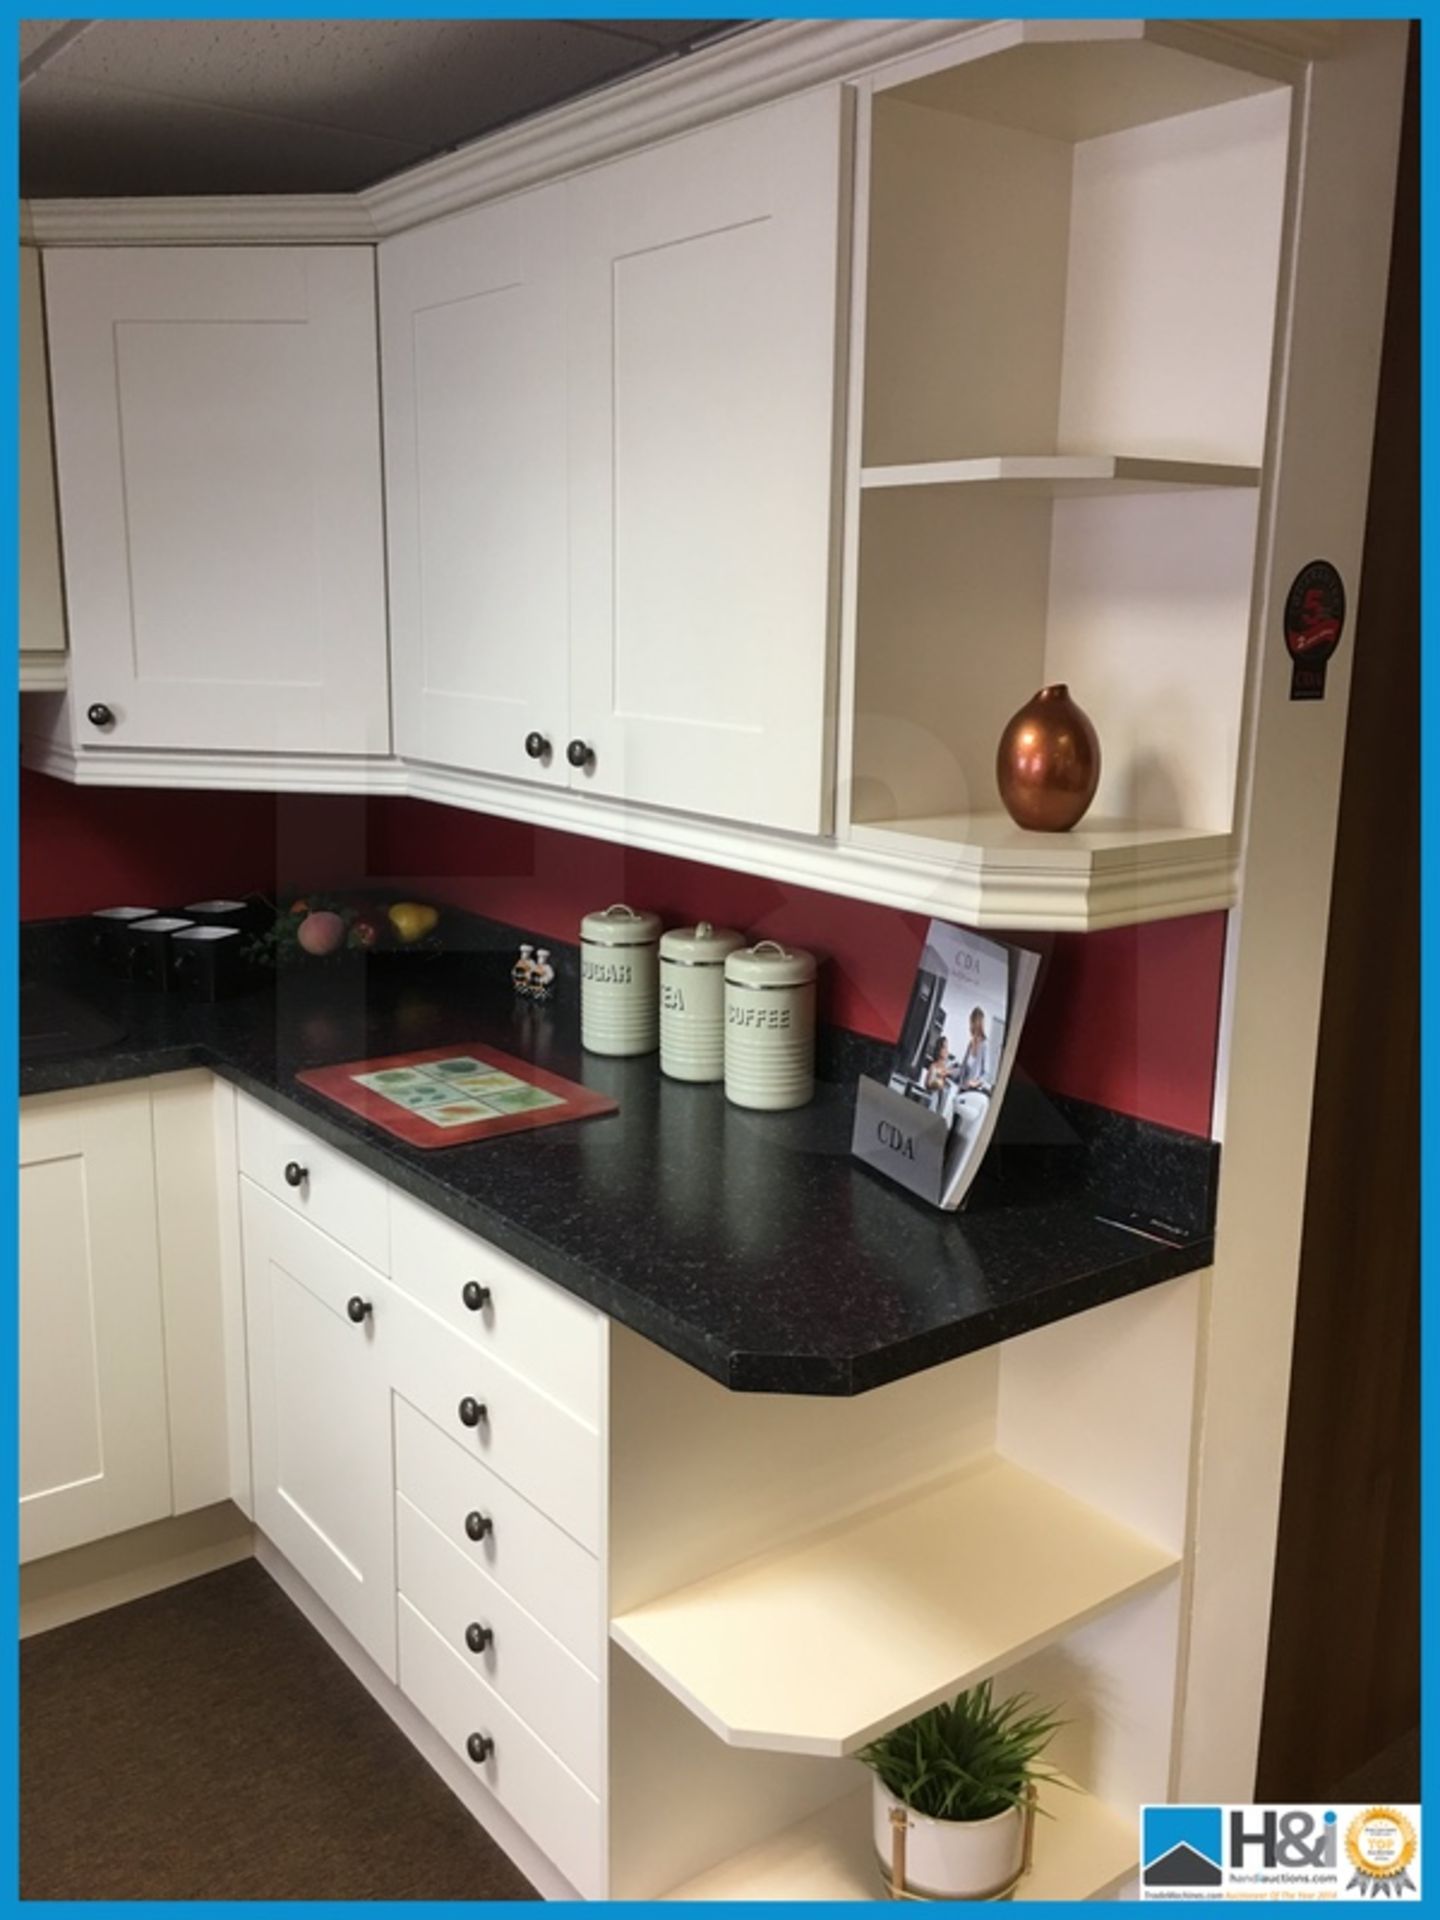 Beautiful white display kitchen compete with dark marble effect worktop, matching dark 1.5 bowl - Image 2 of 15